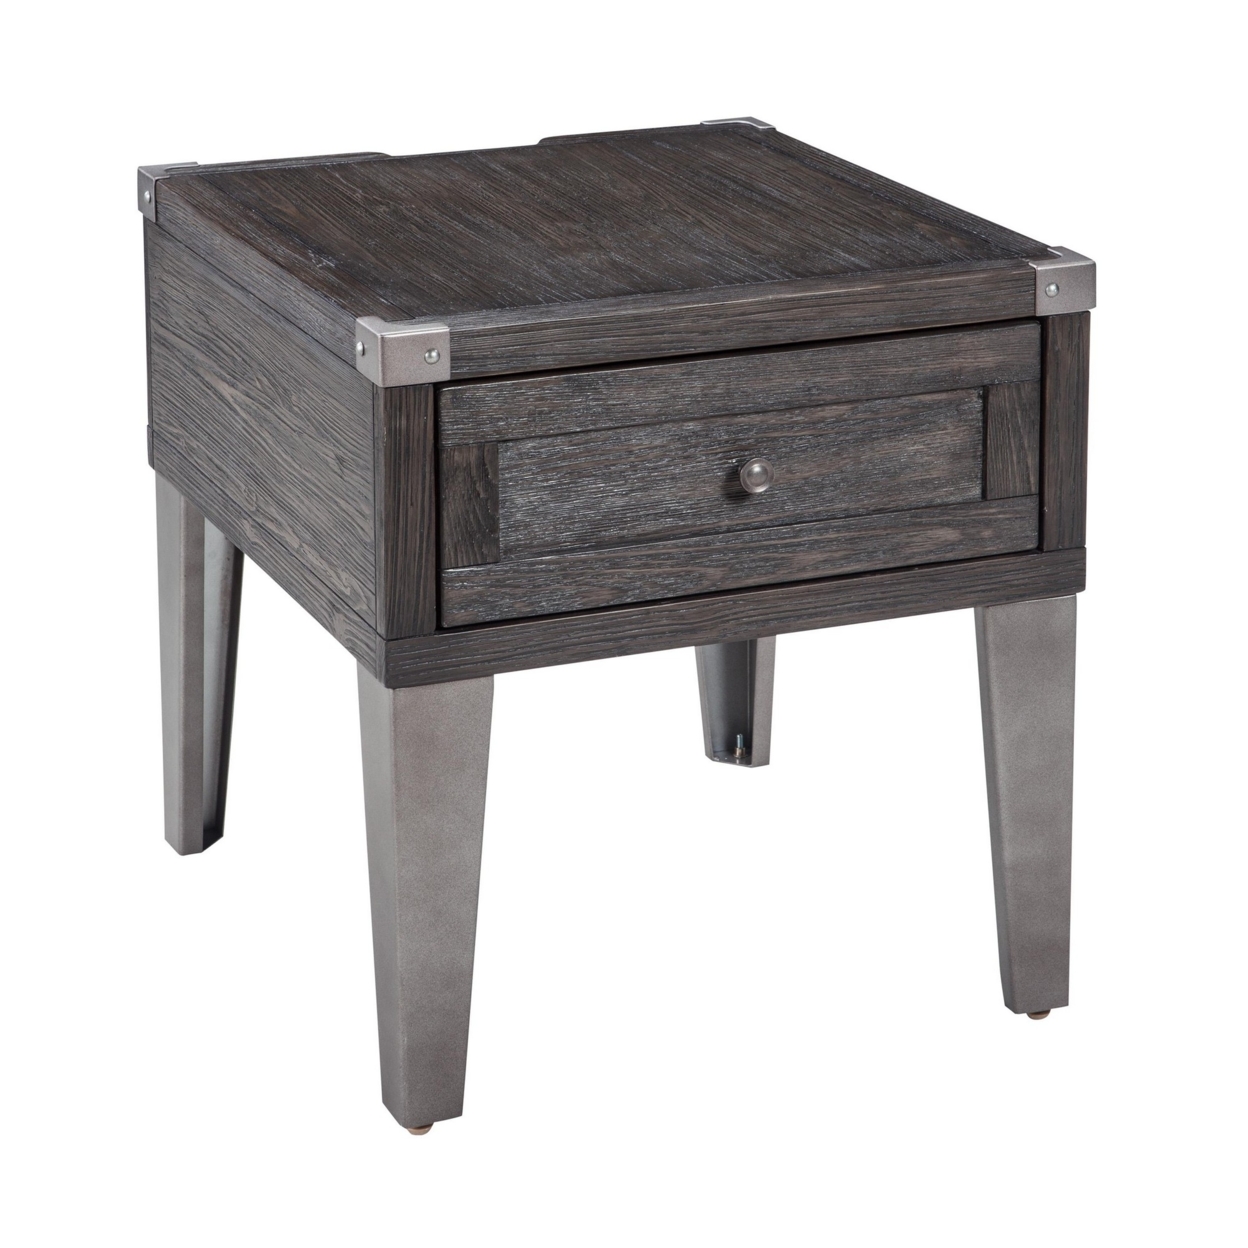 Rectangular Wooden End Table With 1 Drawer And Corner Metal Brackets, Gray- Saltoro Sherpi